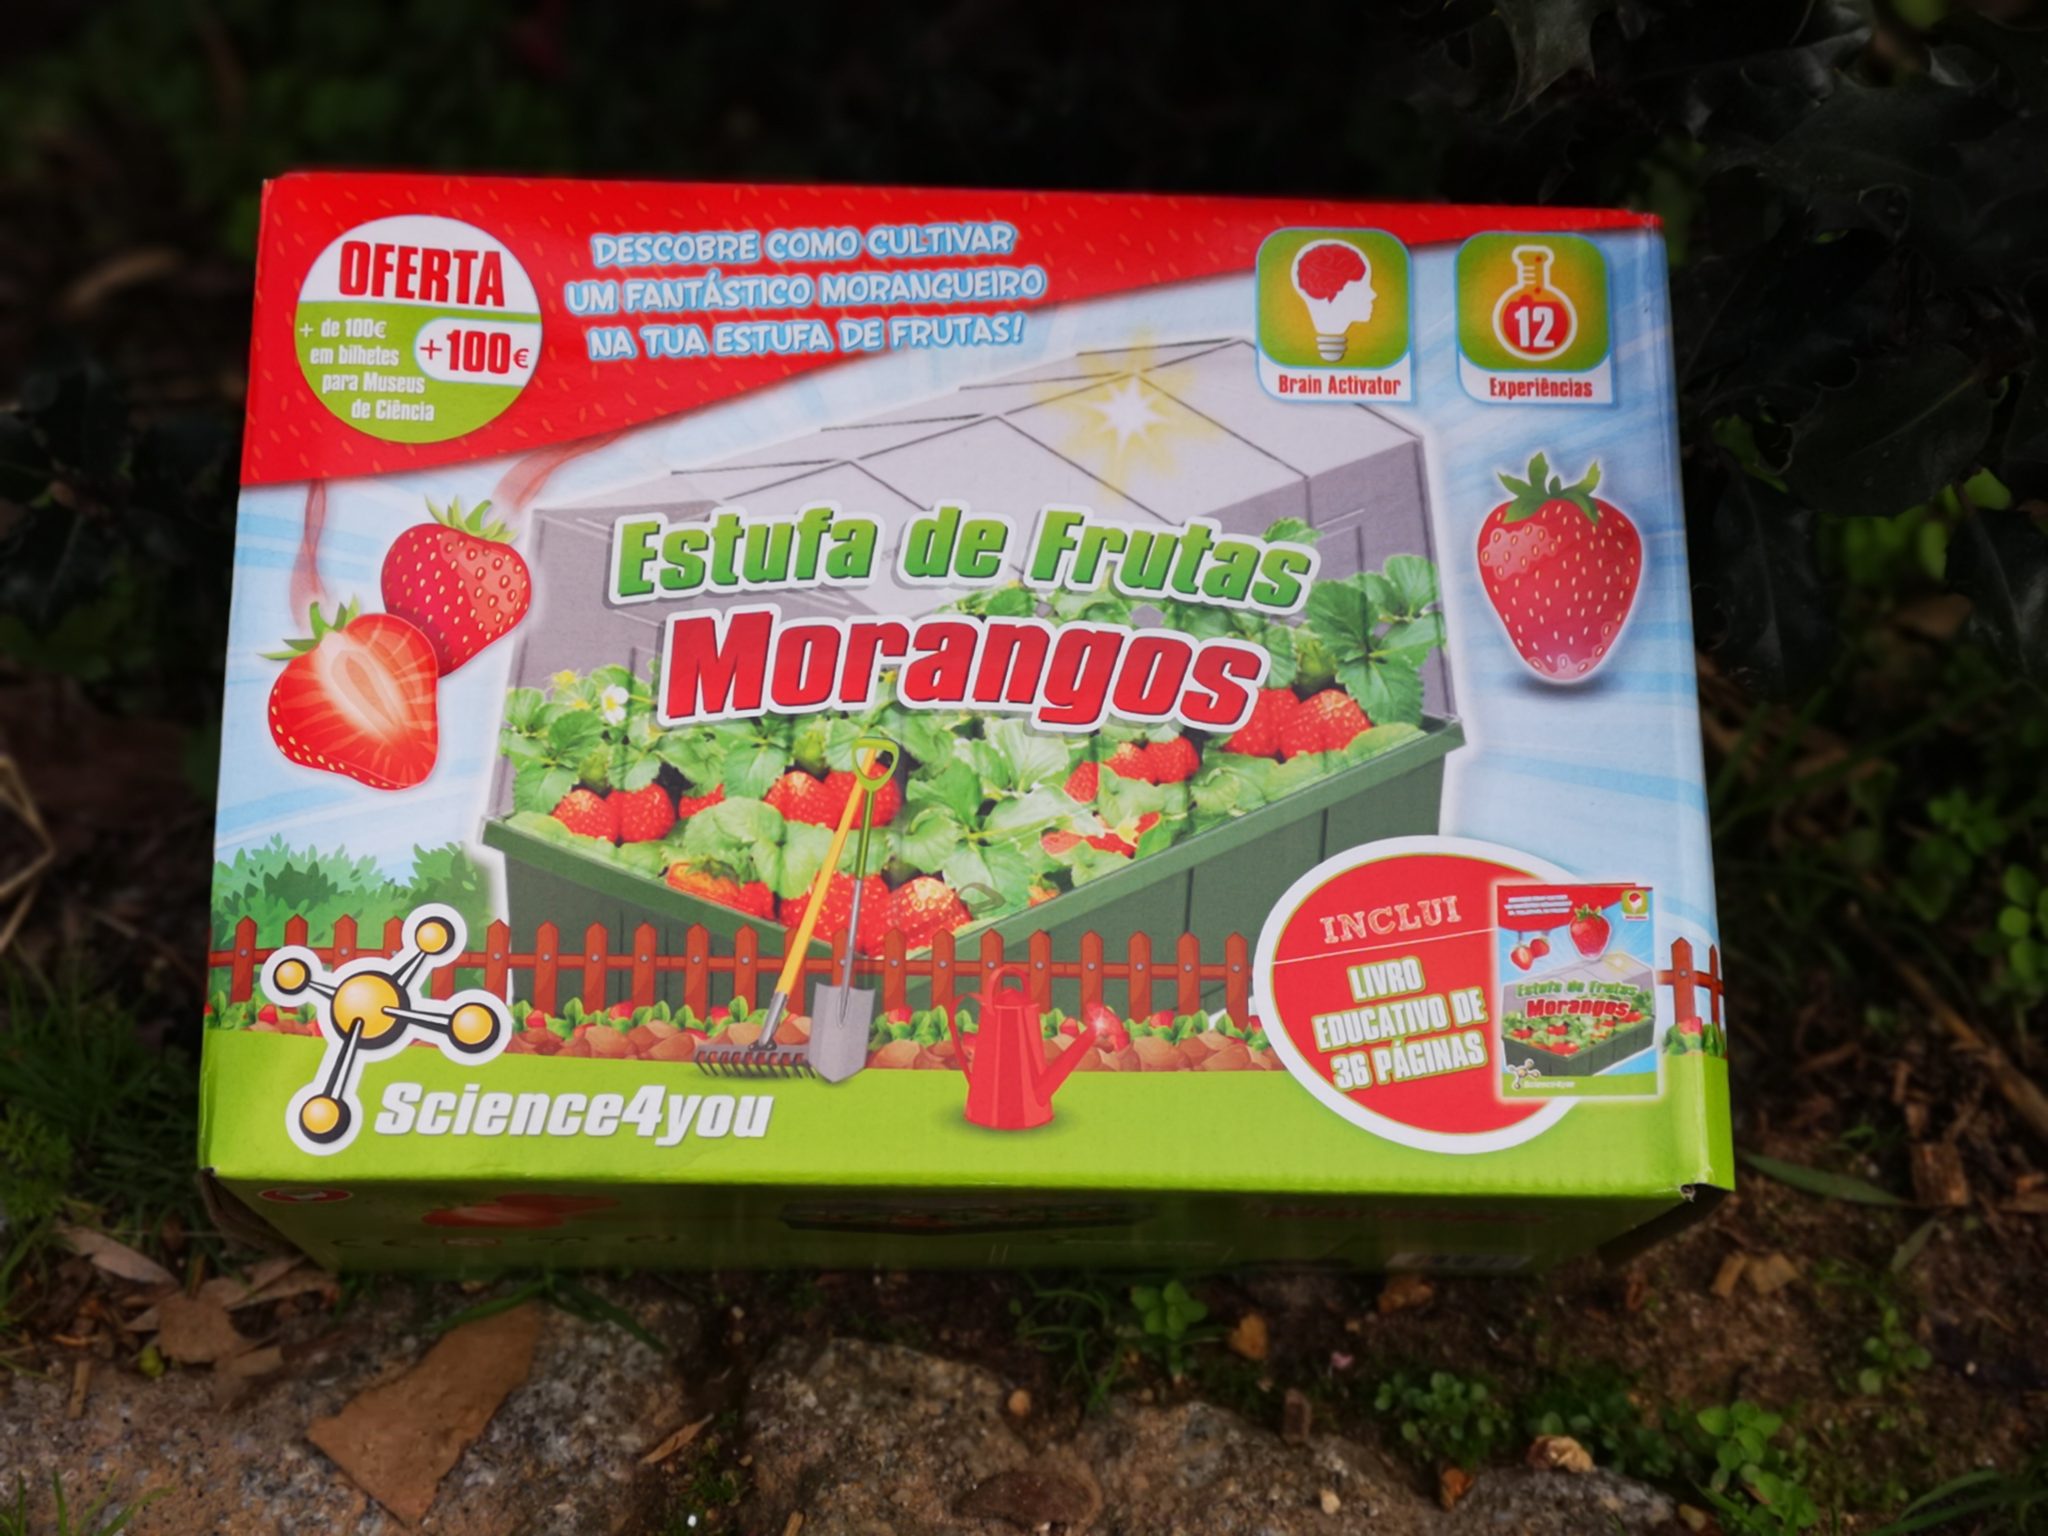 Unboxing Science4you: recebi uma estufa de frutas de morangos